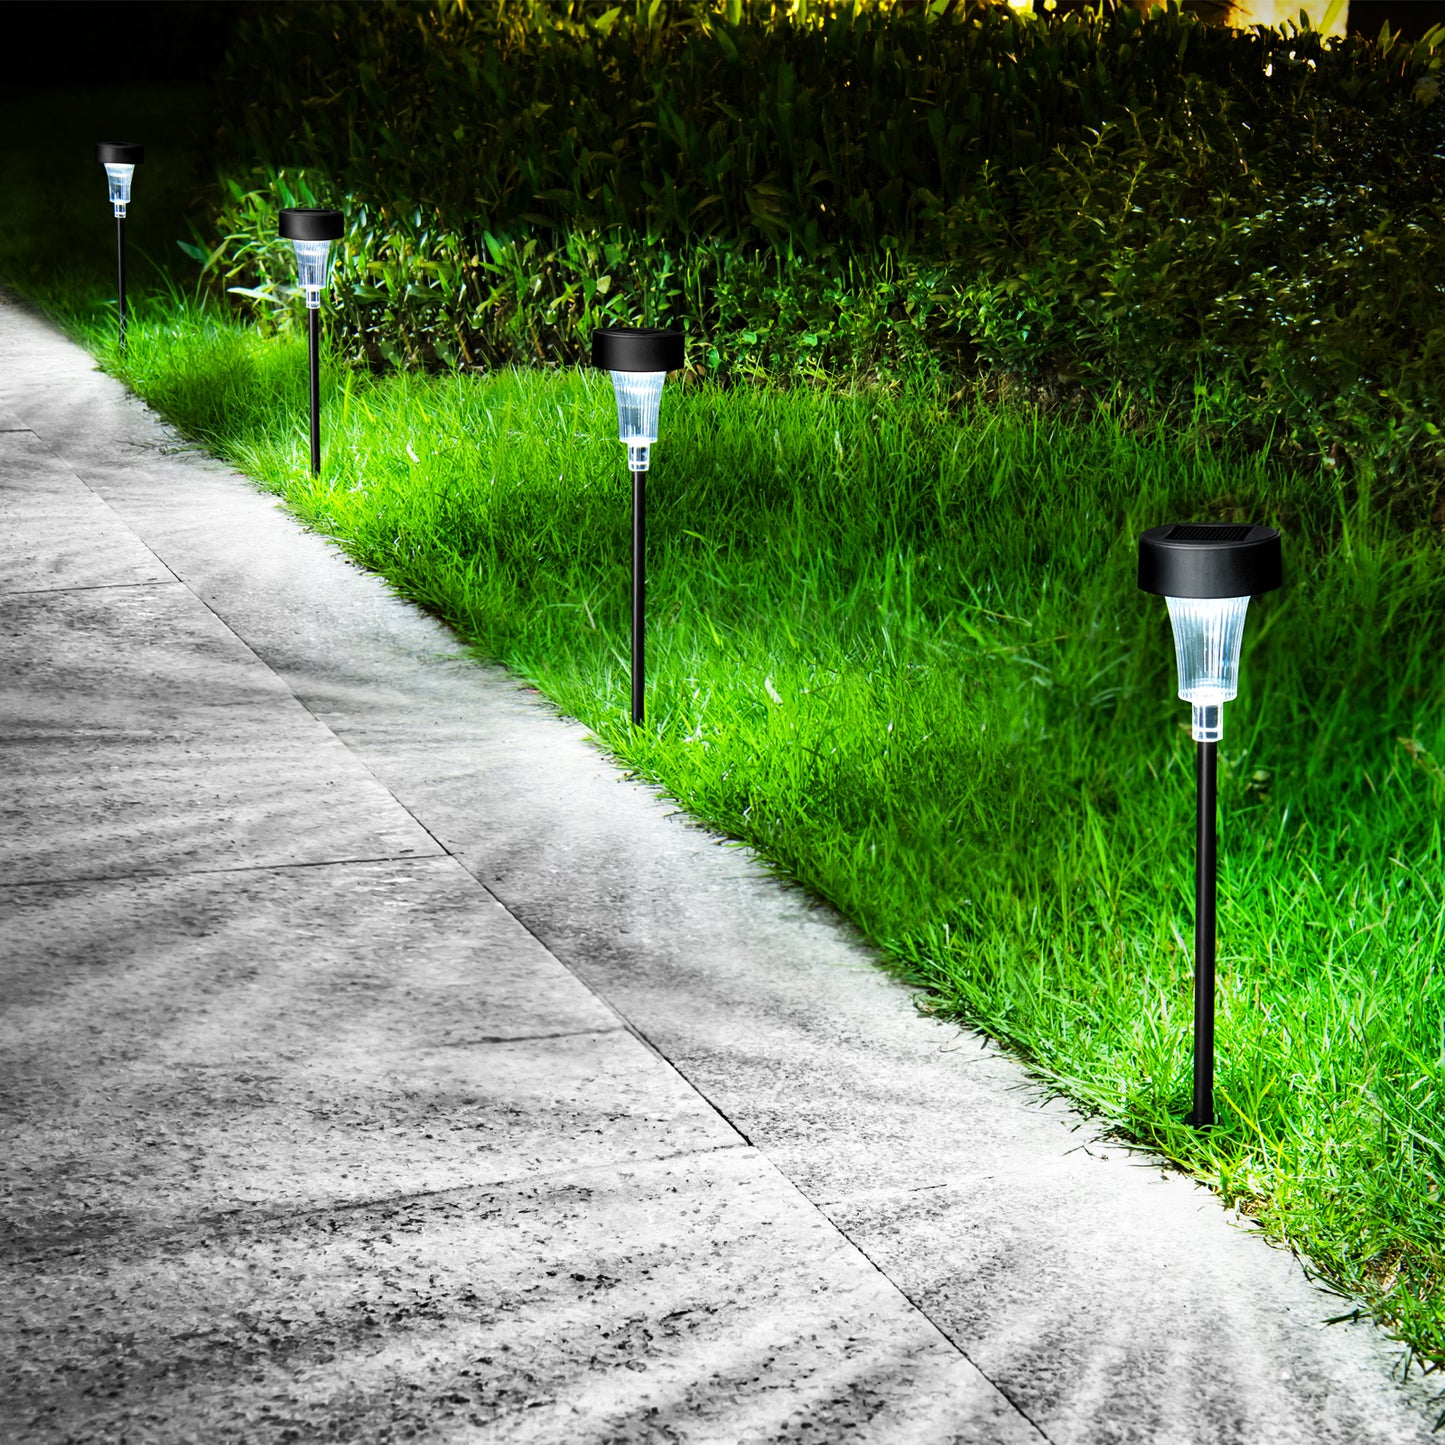 Solar Umbrella light Outdoor Courtyard Light Villa Garden Landscape Decoration Ground Insertion Lawn LED Landscape Light 4Pieces